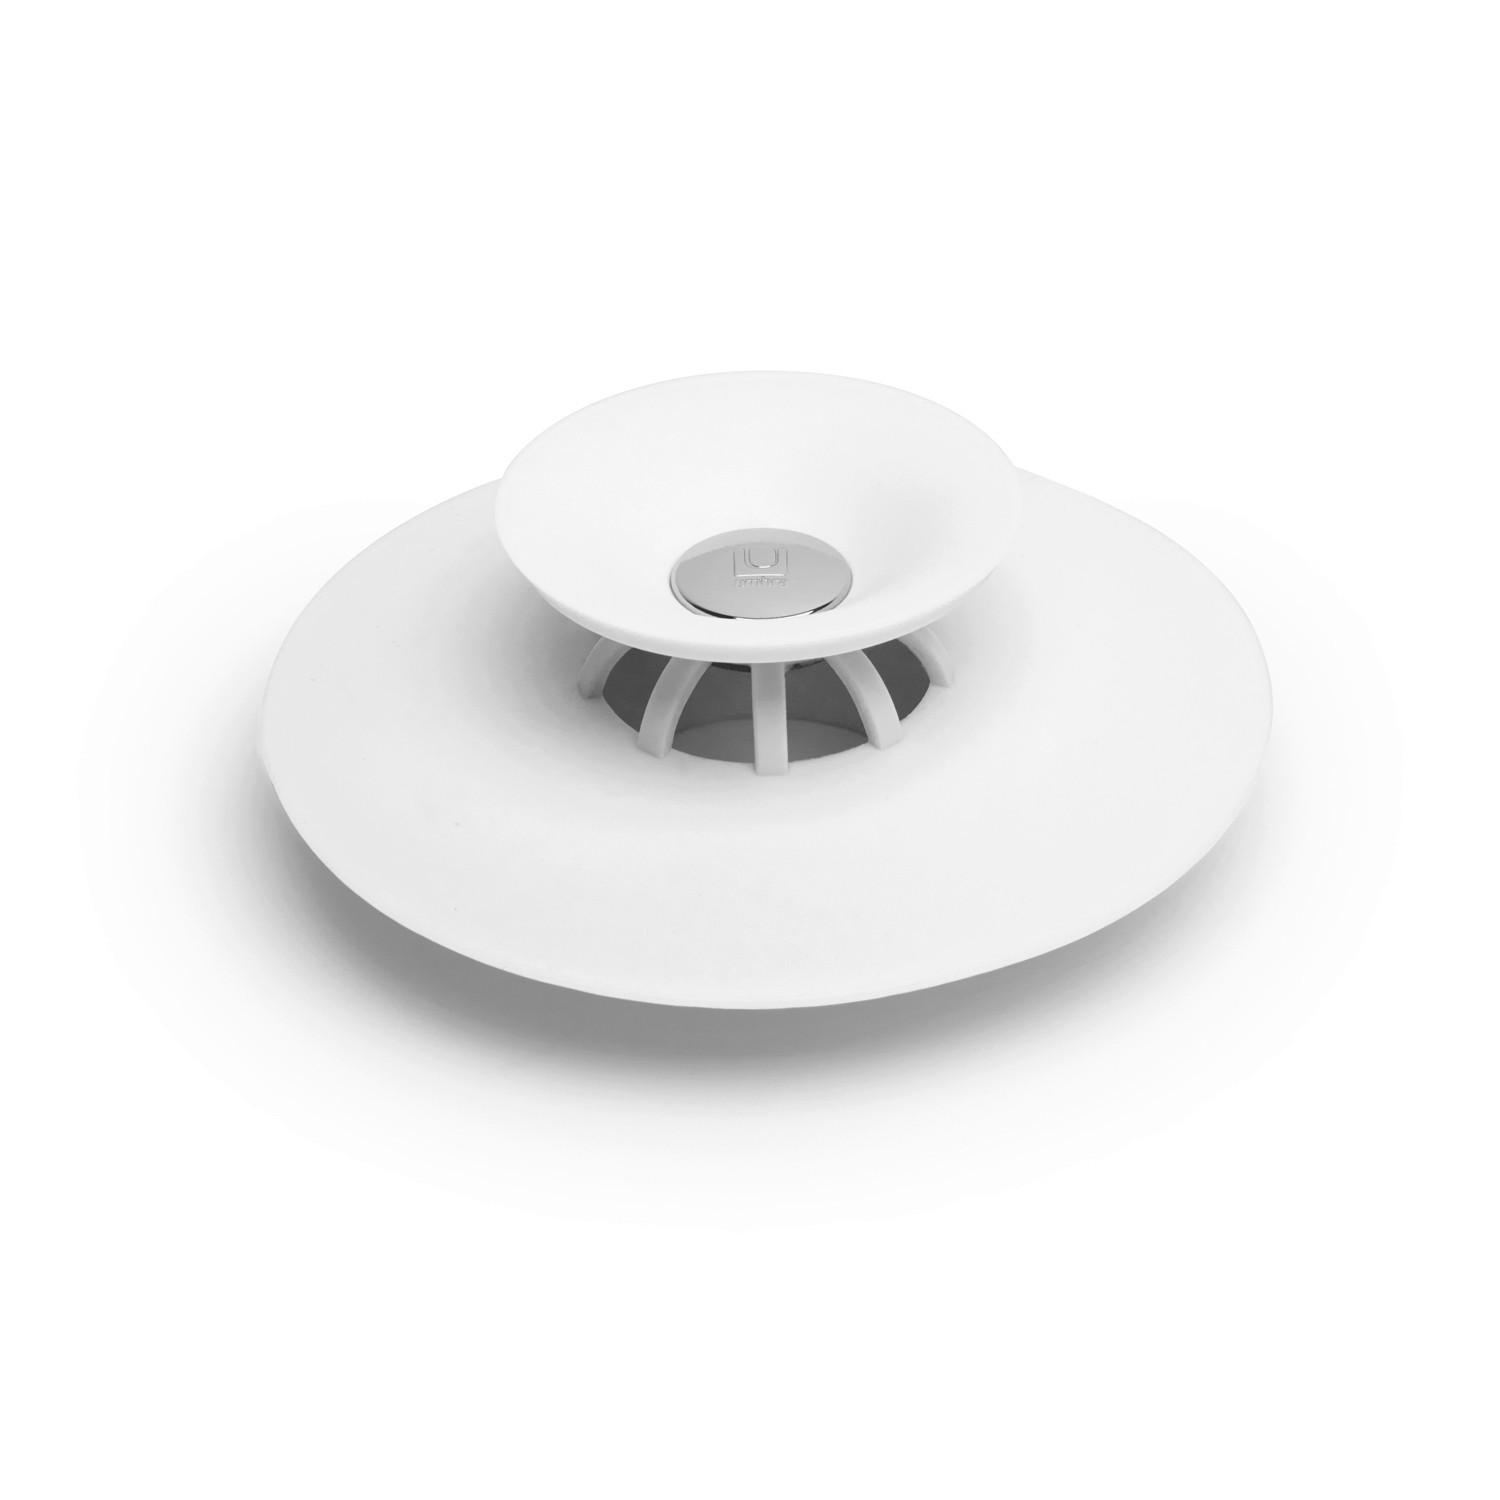 Abflusssieb Easy aus Silikon in Weiß - Weiß, MODERN, Kunststoff/Metall (10,2/2,5cm) - Premium Living